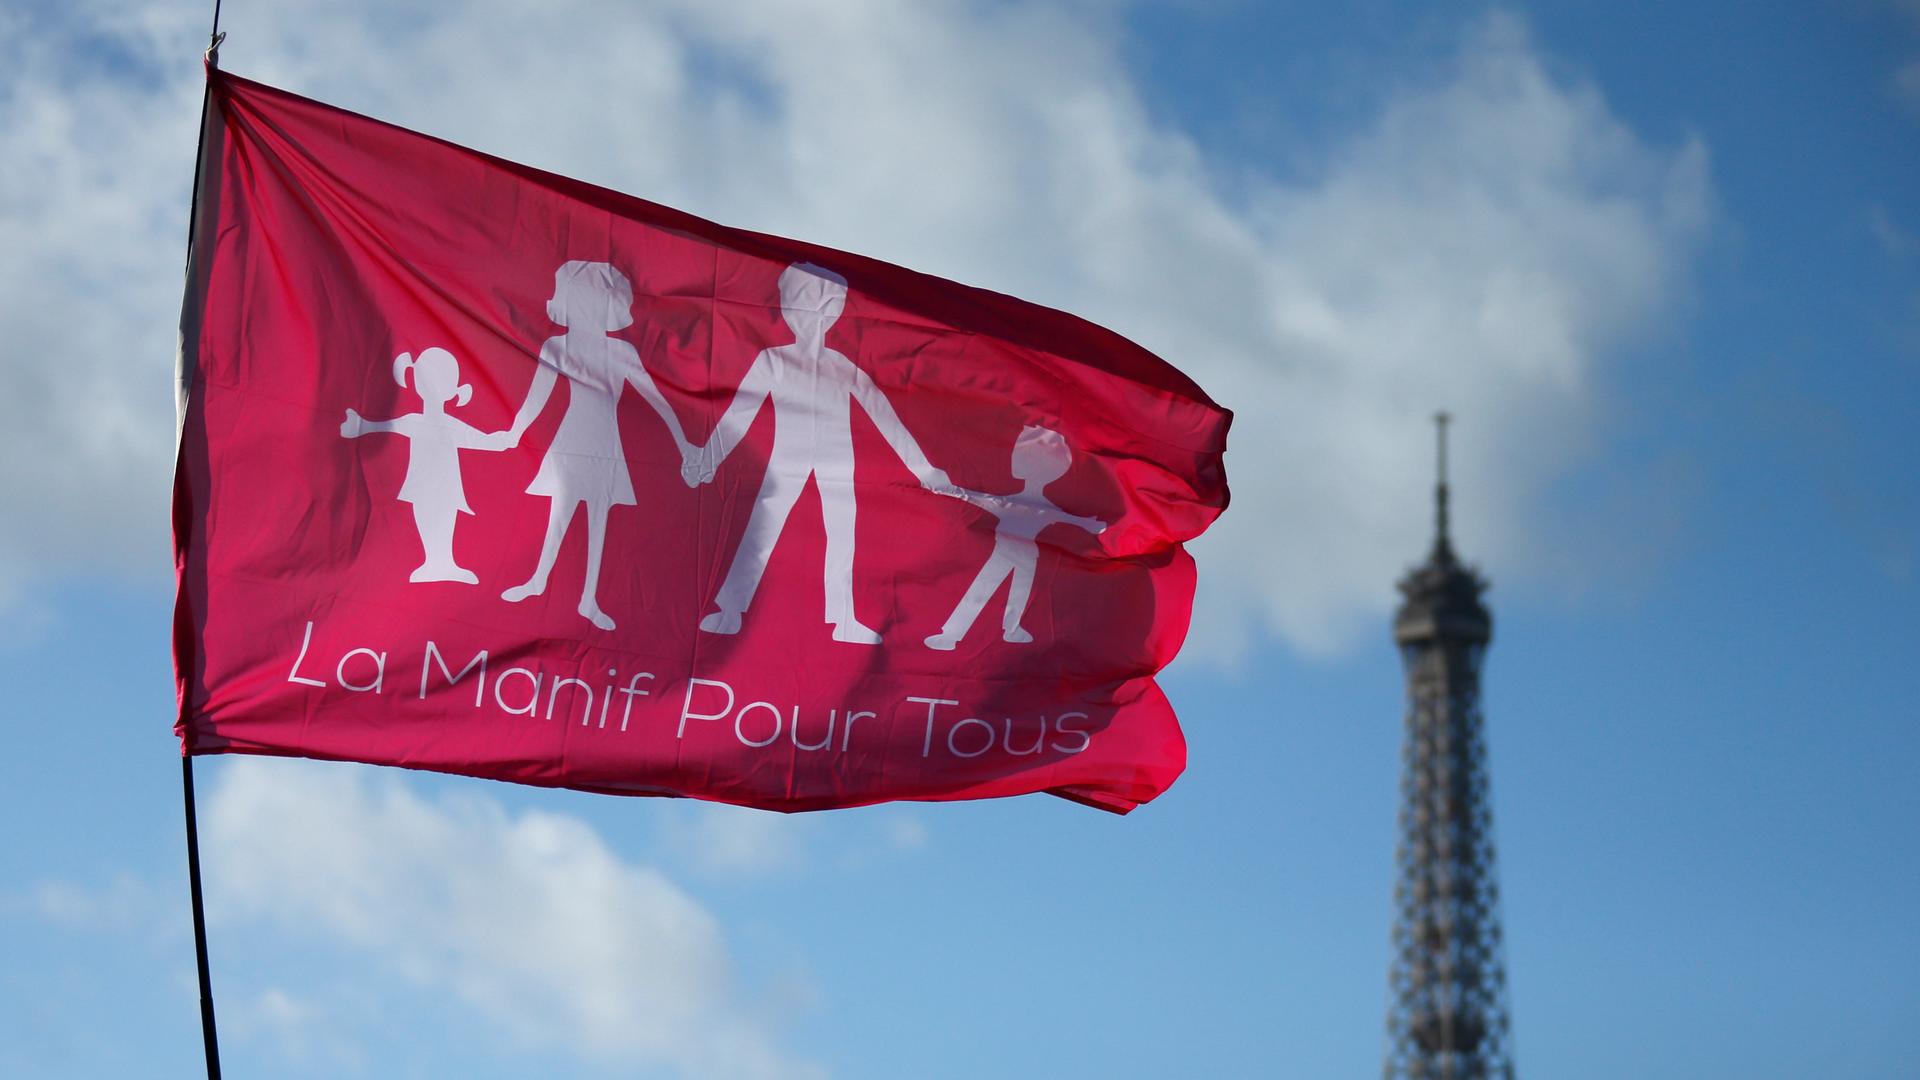 La Manif Pour Tous flag, the group is against gay marriage